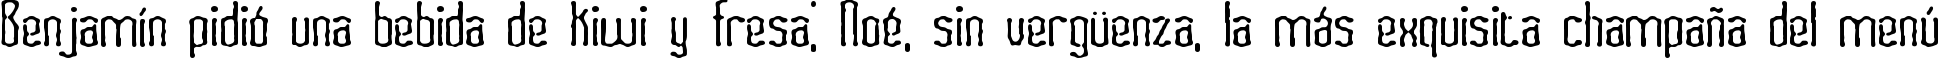 Пример написания шрифтом Fascii Smudge BRK текста на испанском